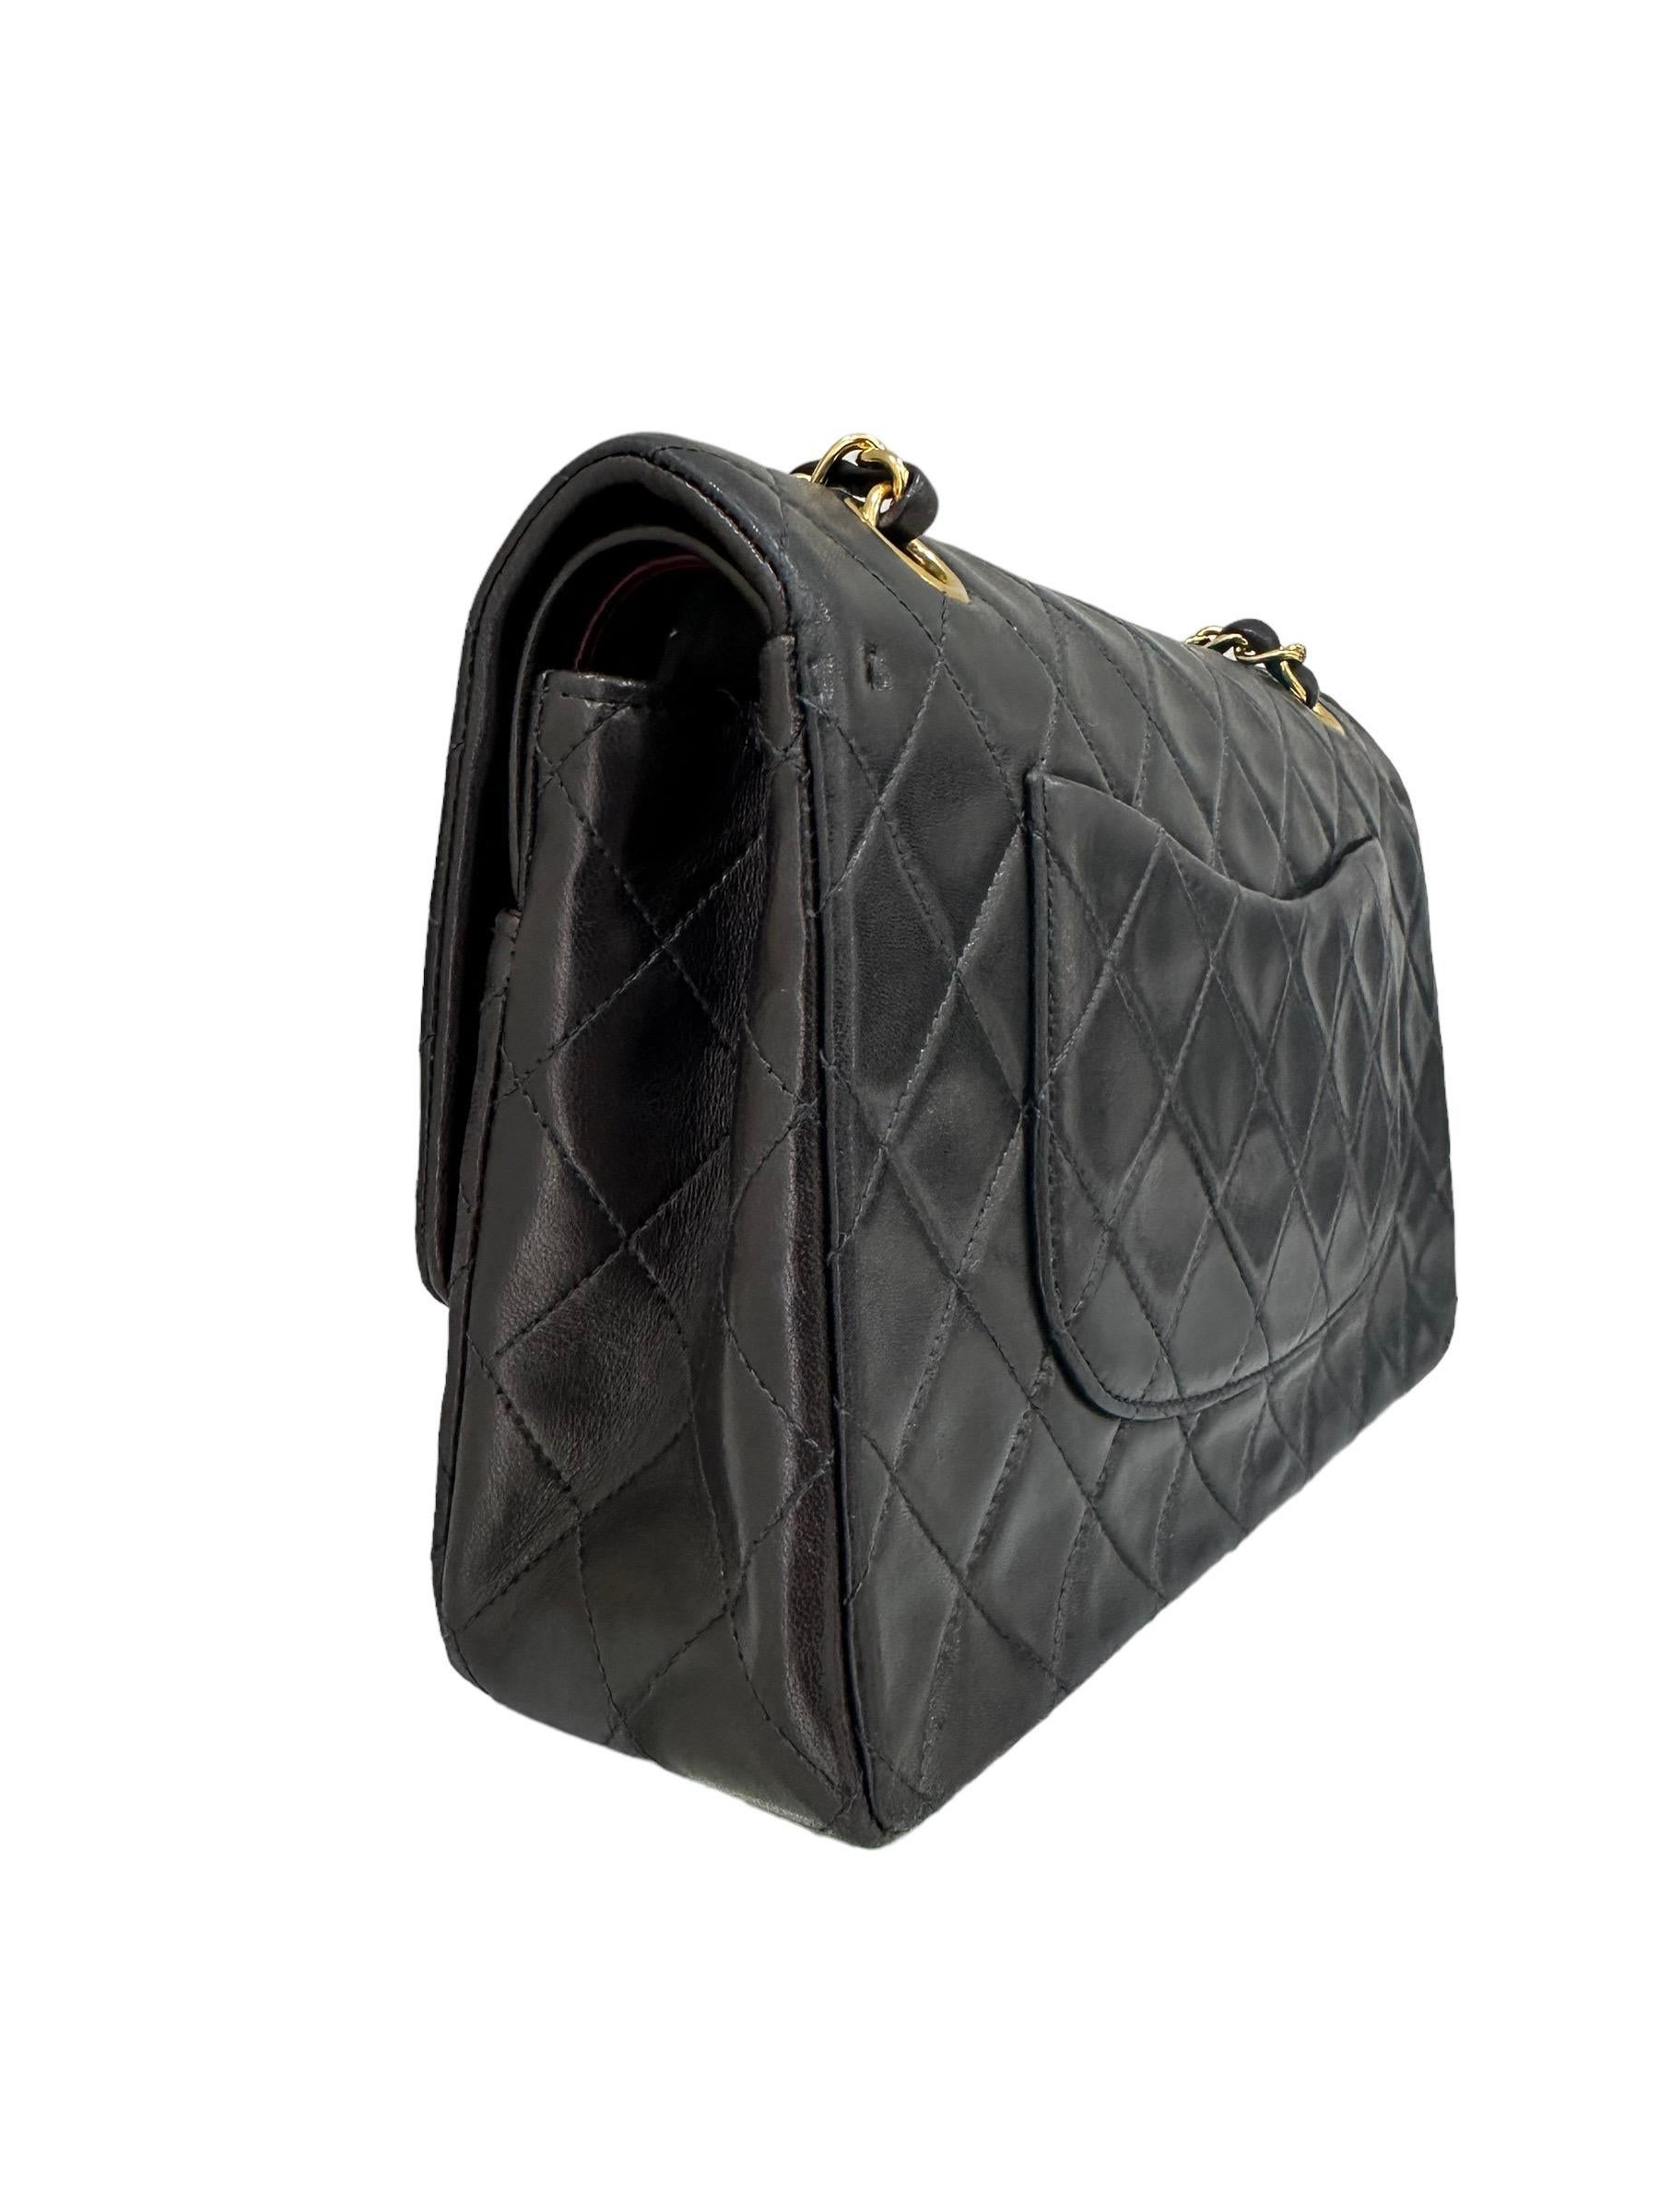 1996 Chanel Timeless Classic 2.55 Black Leather Top Shoulder Bag For Sale 5